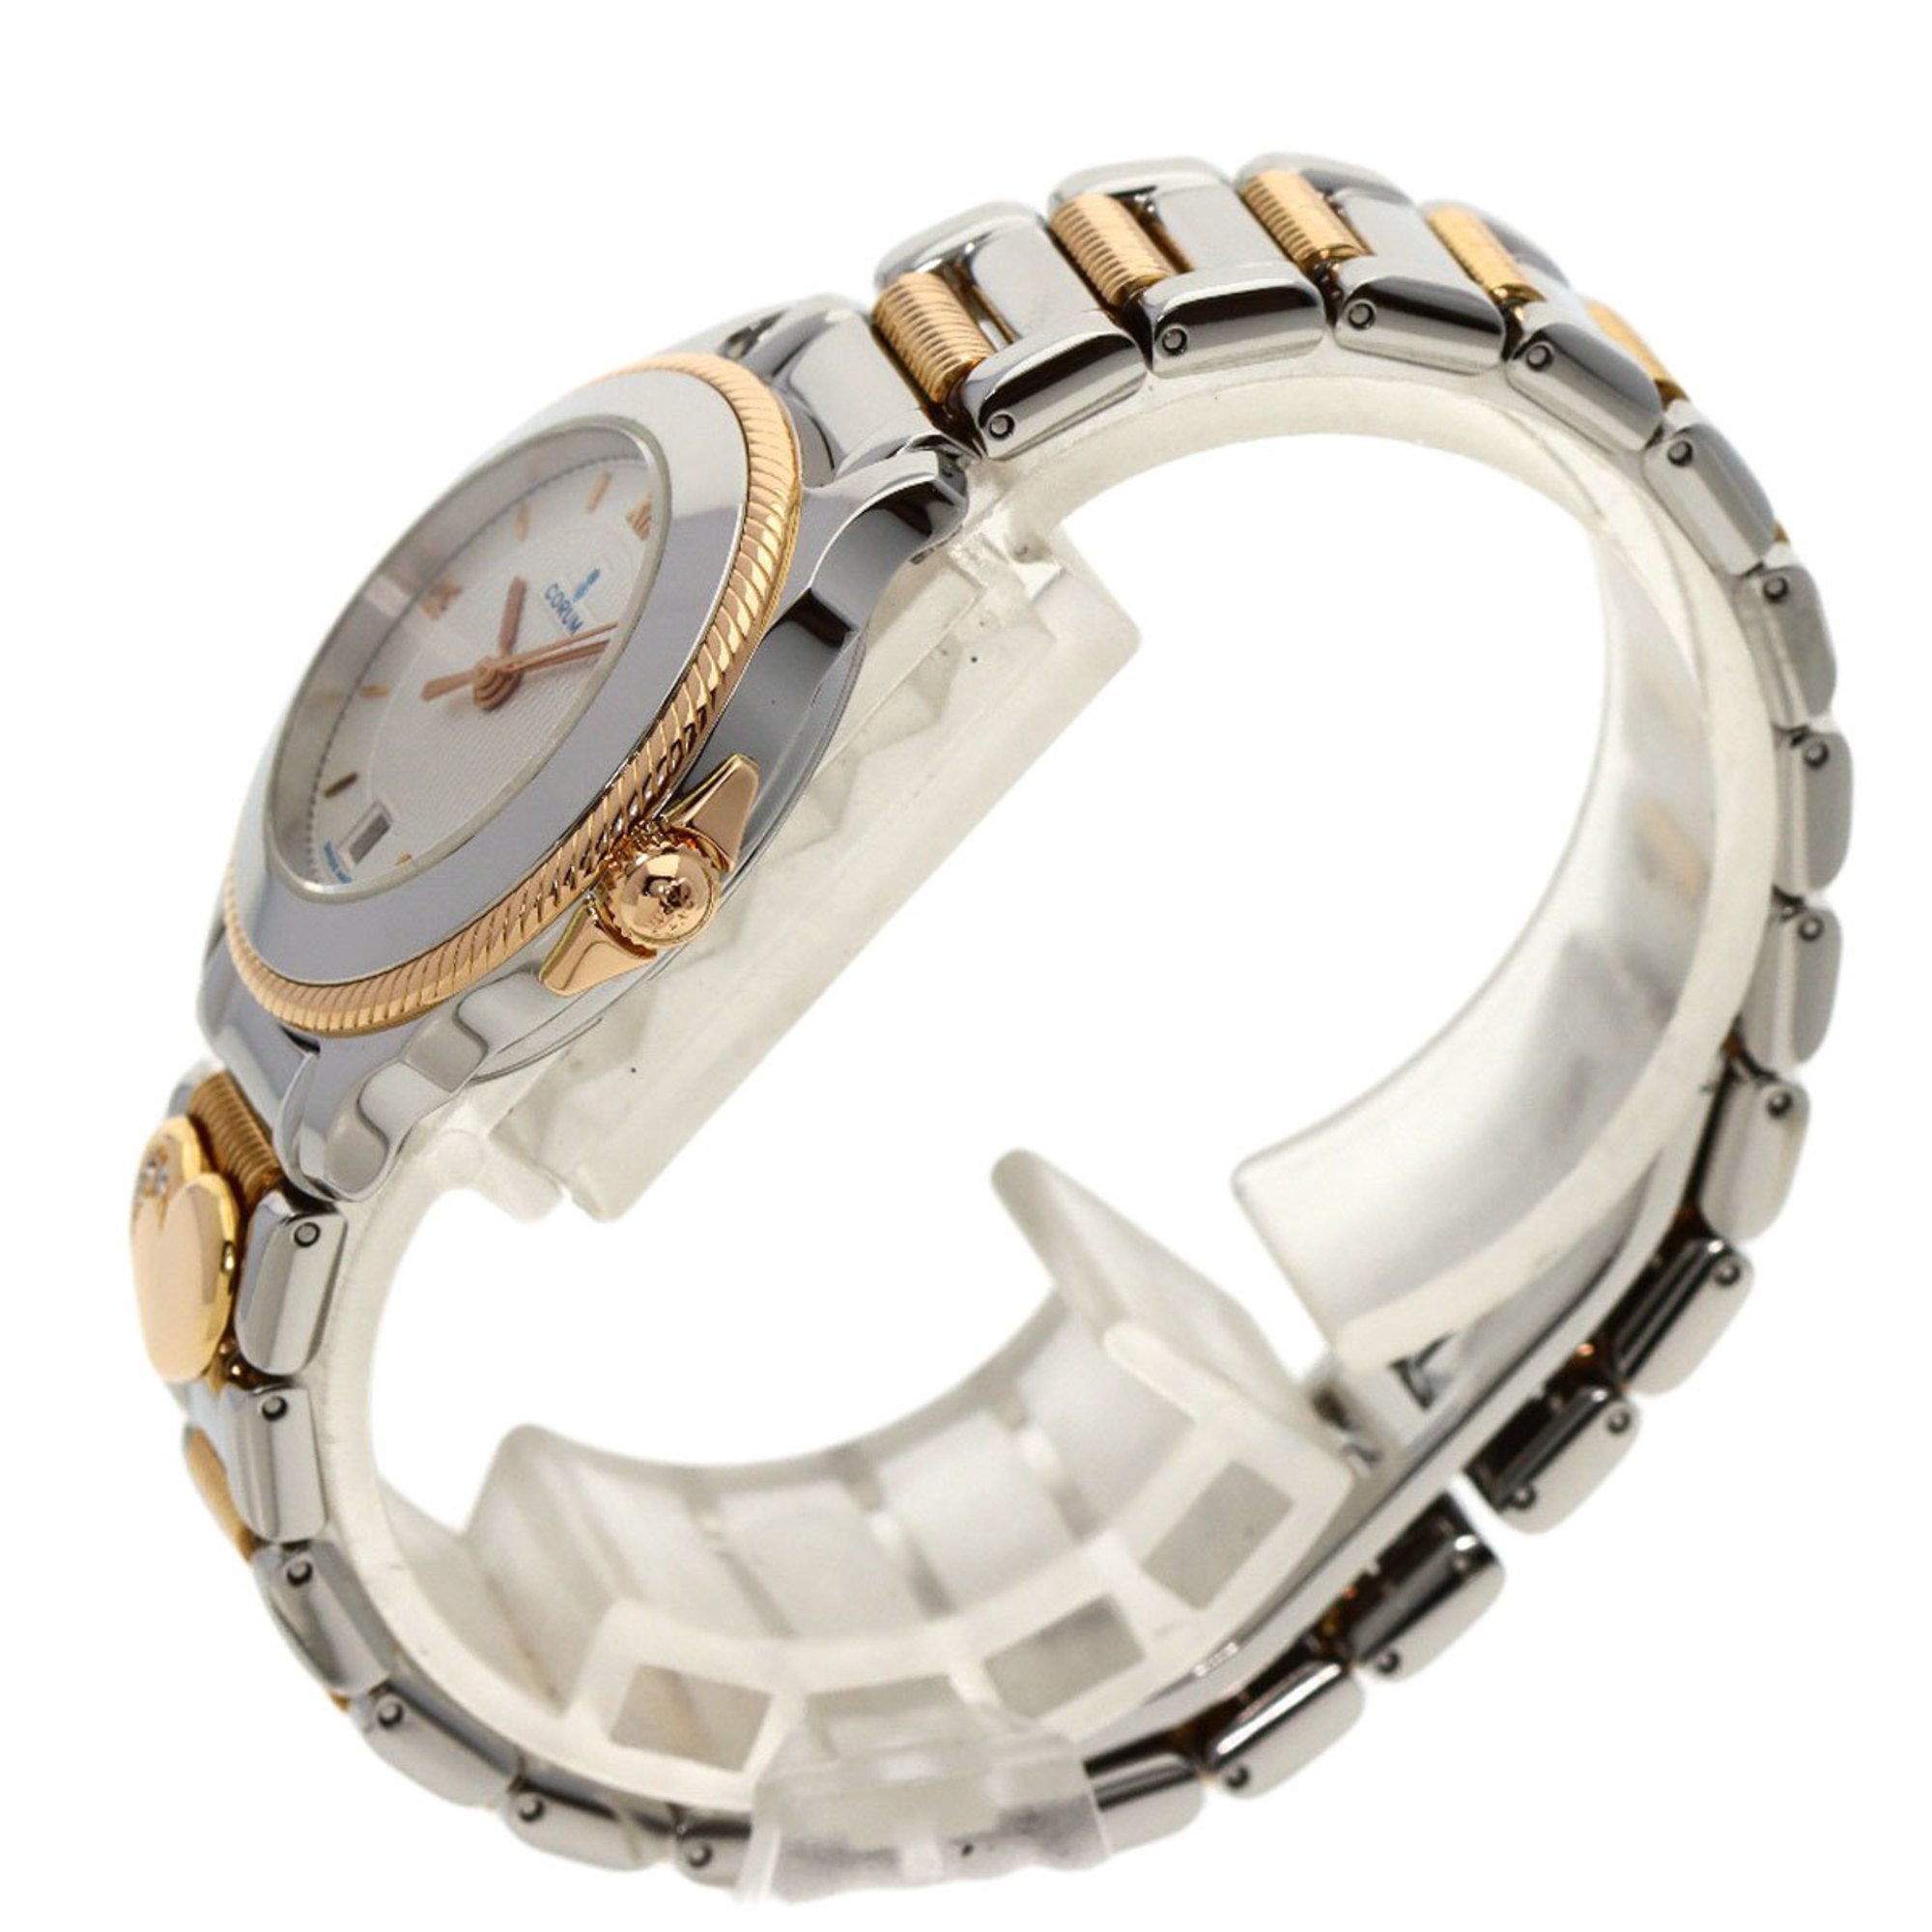 Corum 39.311.24 M584 combination watch stainless steel SSxGP ladies CORUM